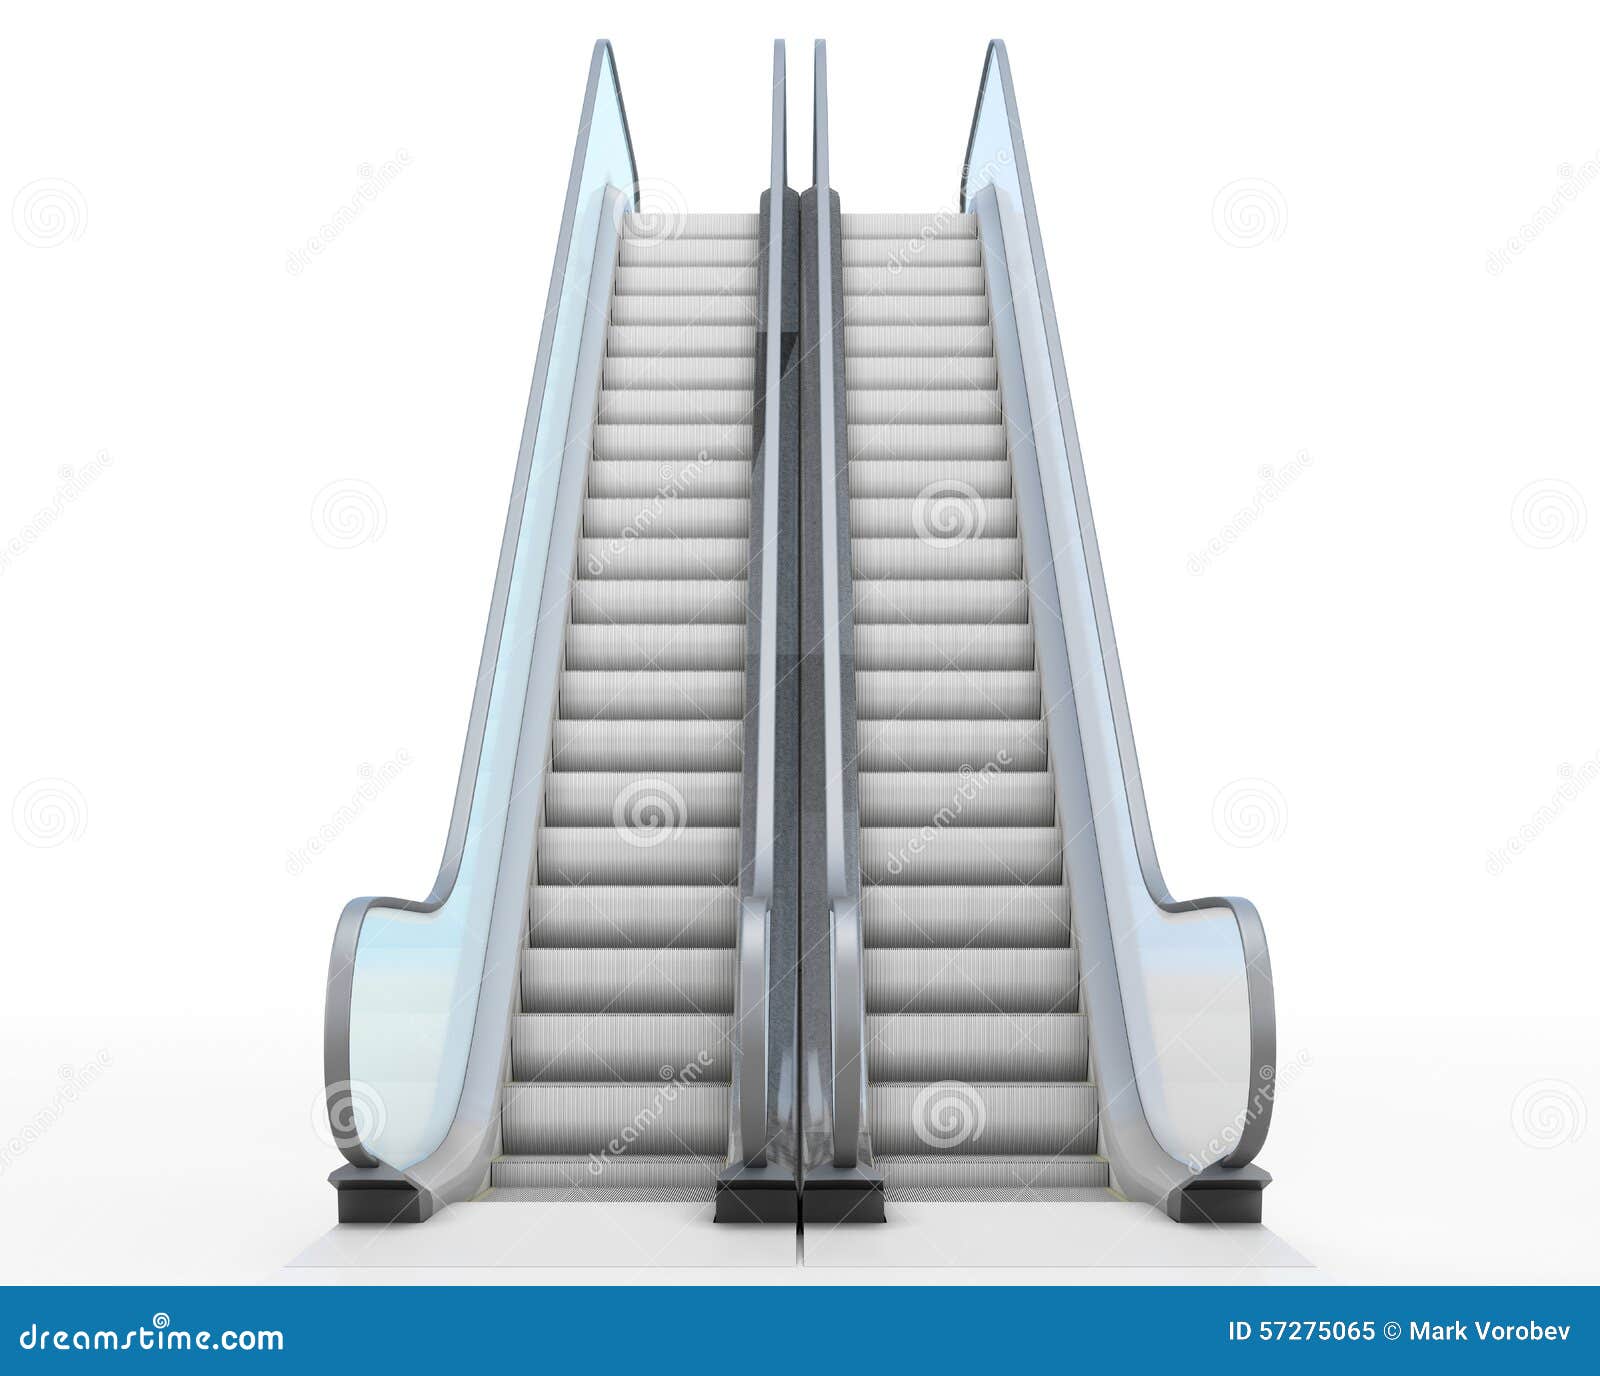 clipart escalator - photo #28